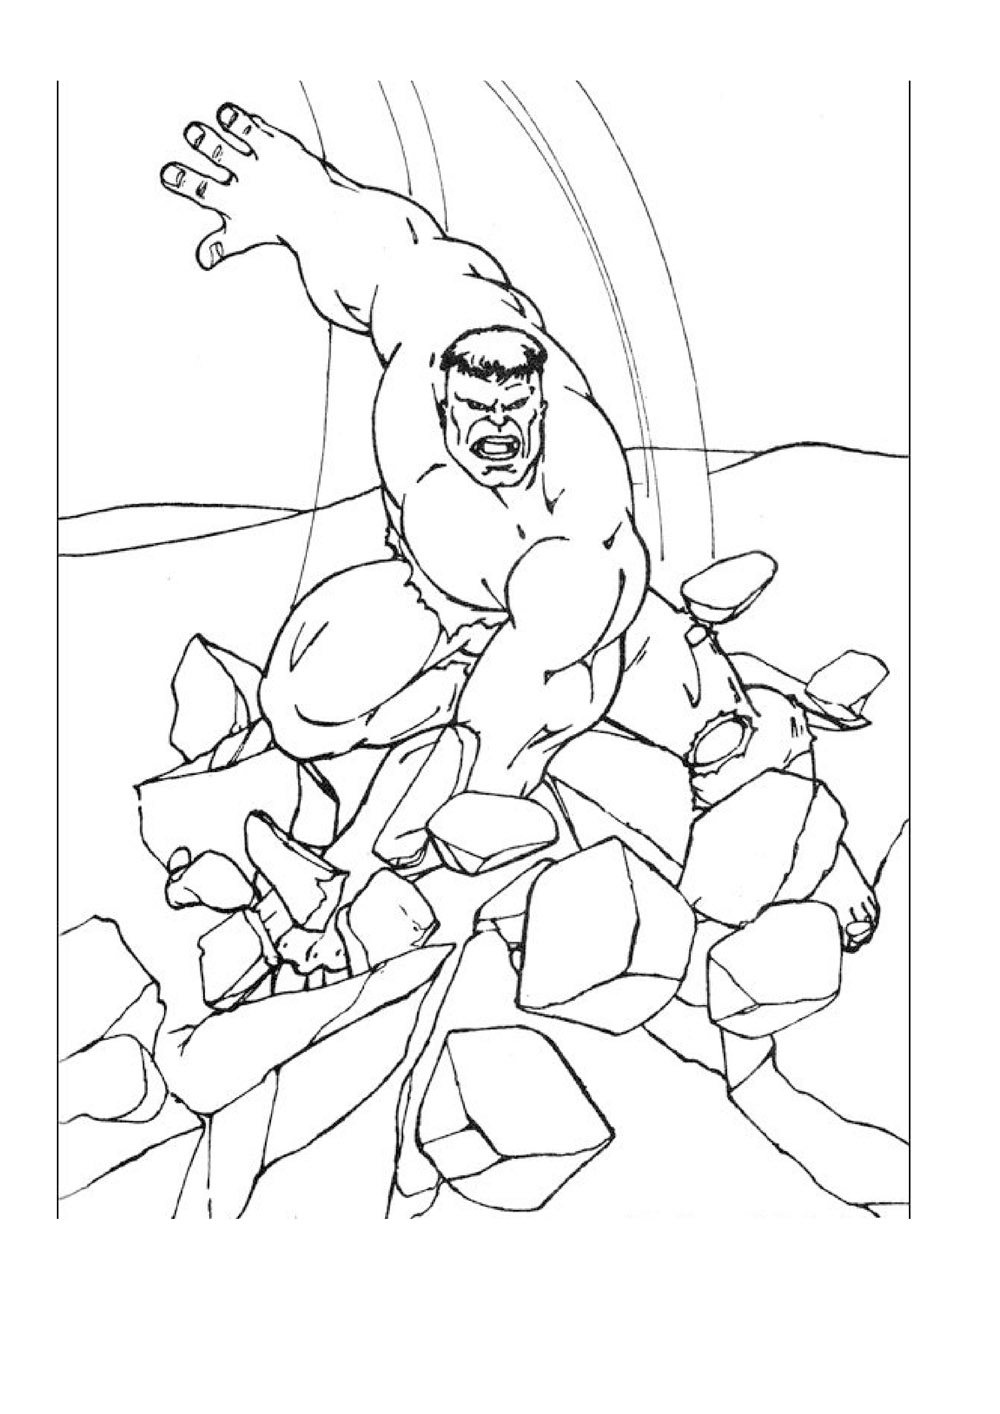 Hulk drawing to print and color